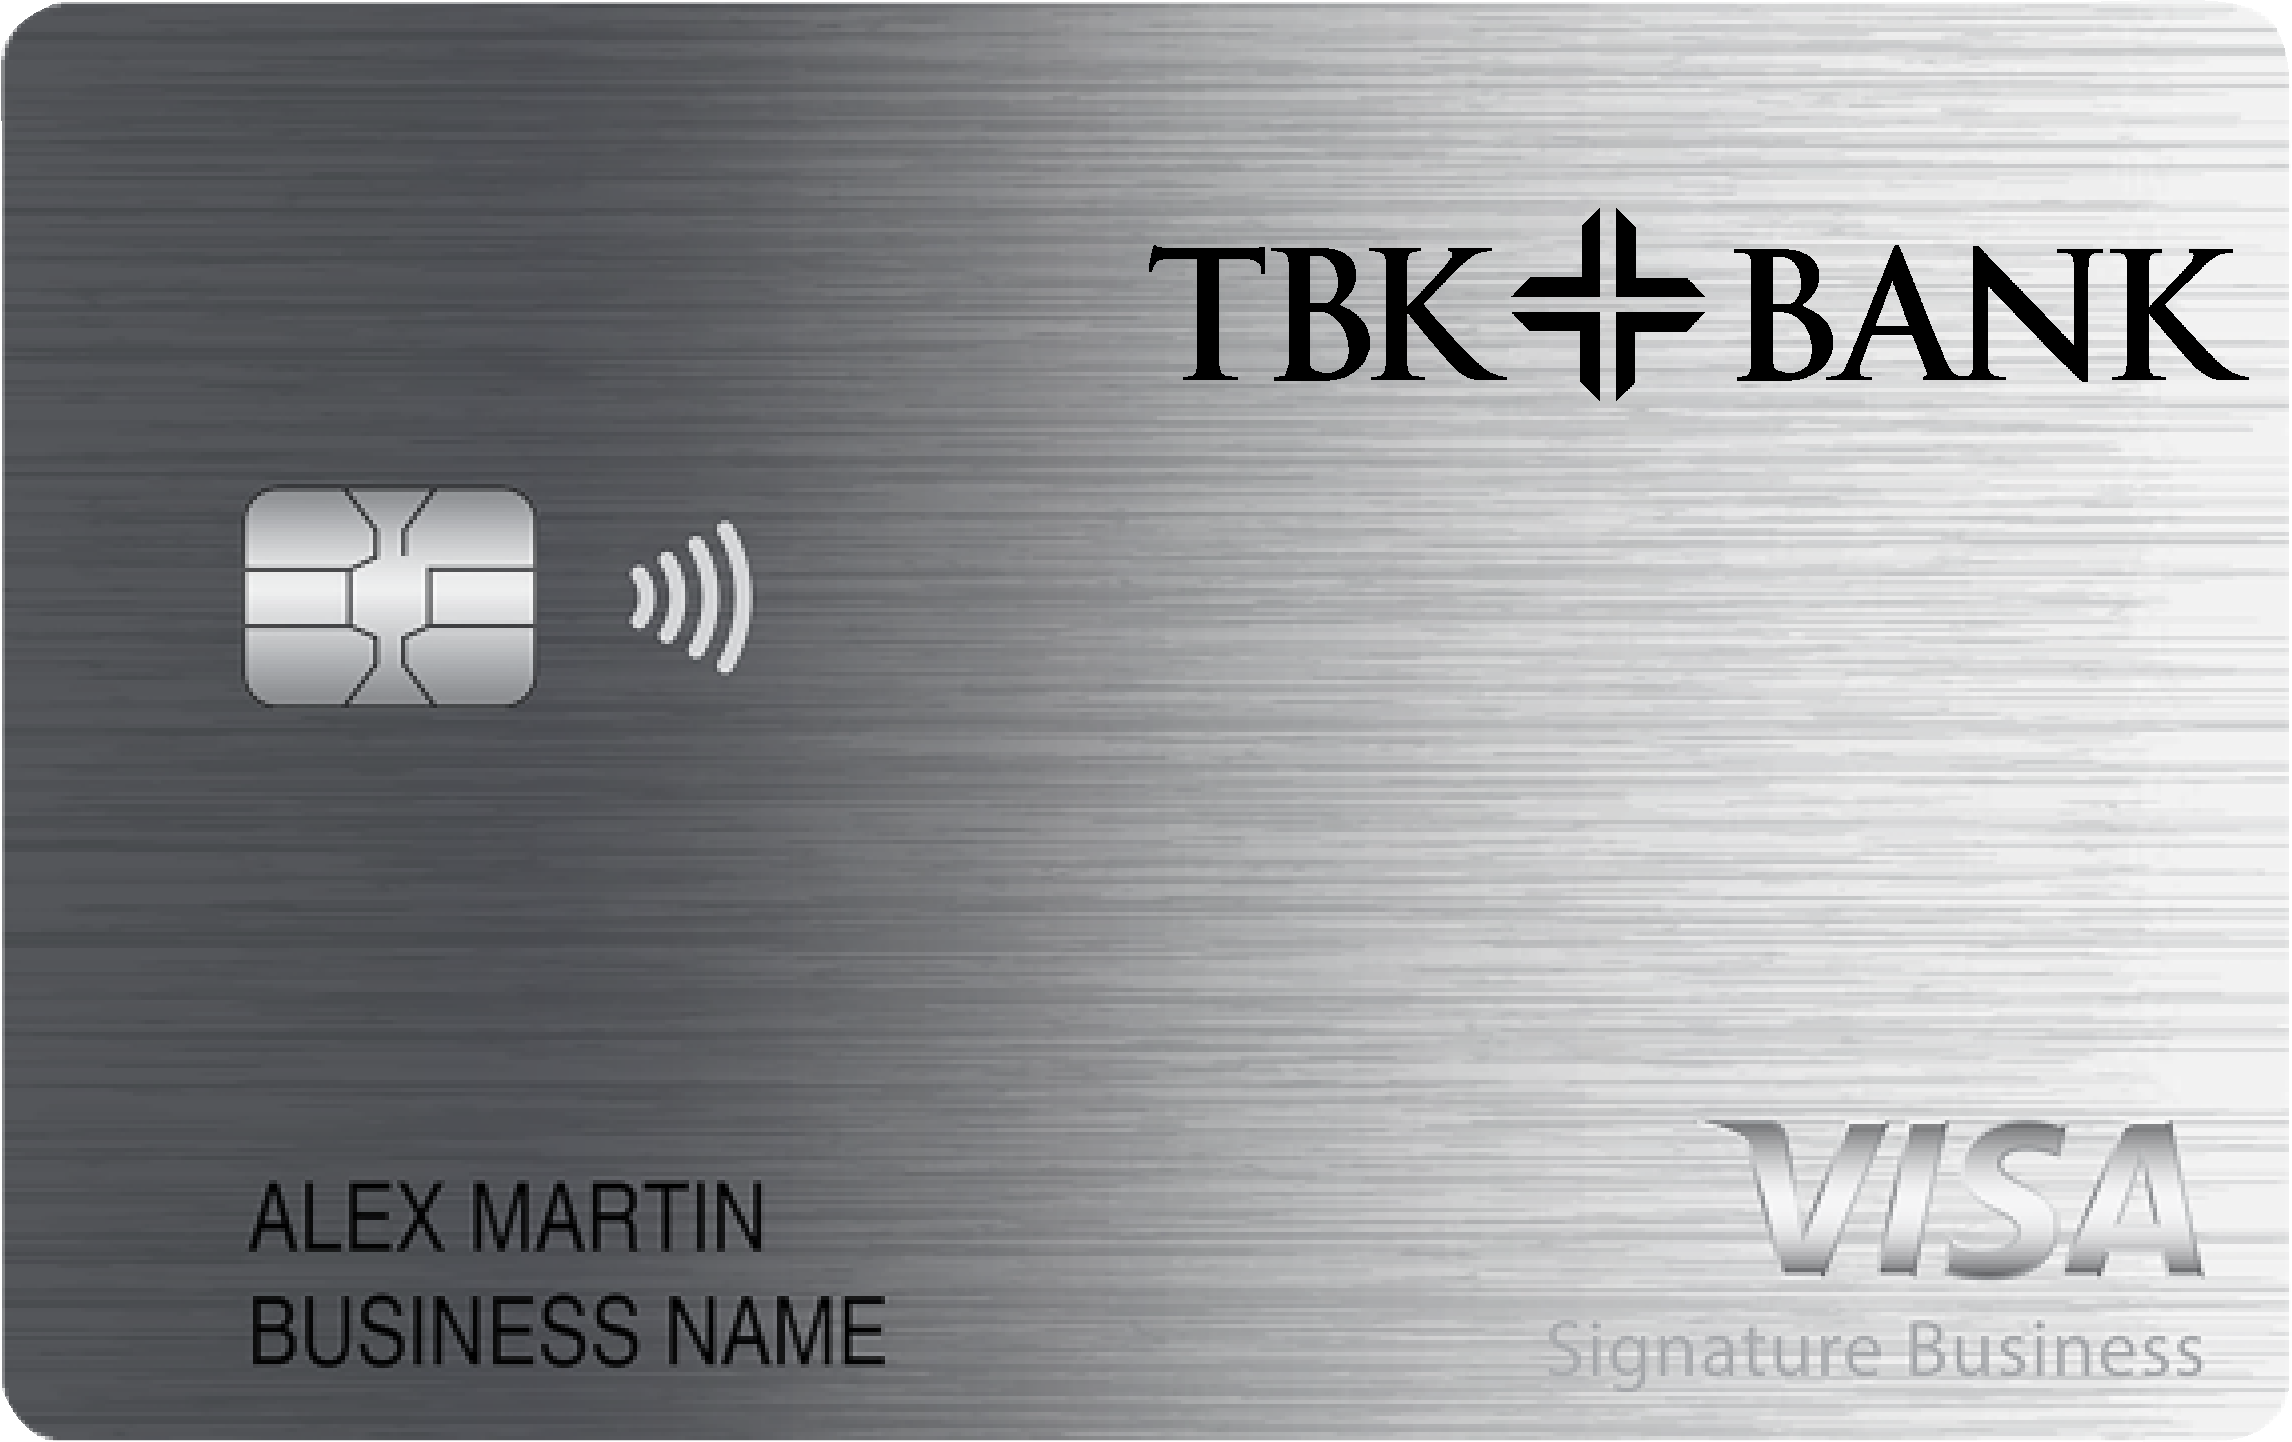 TBK Bank Smart Business Rewards Card